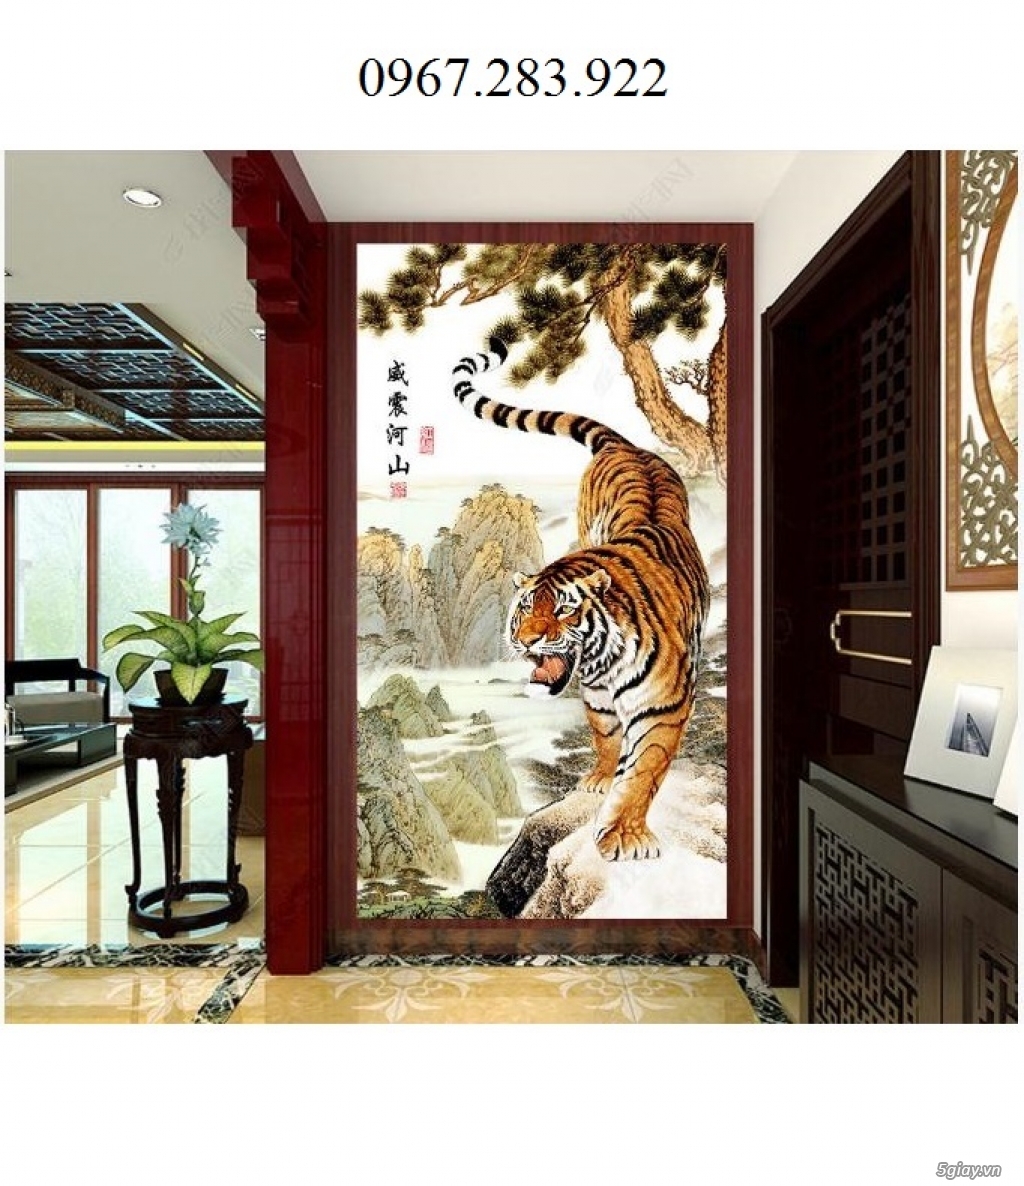 Tranh gạch 3D hổ rừng - 4